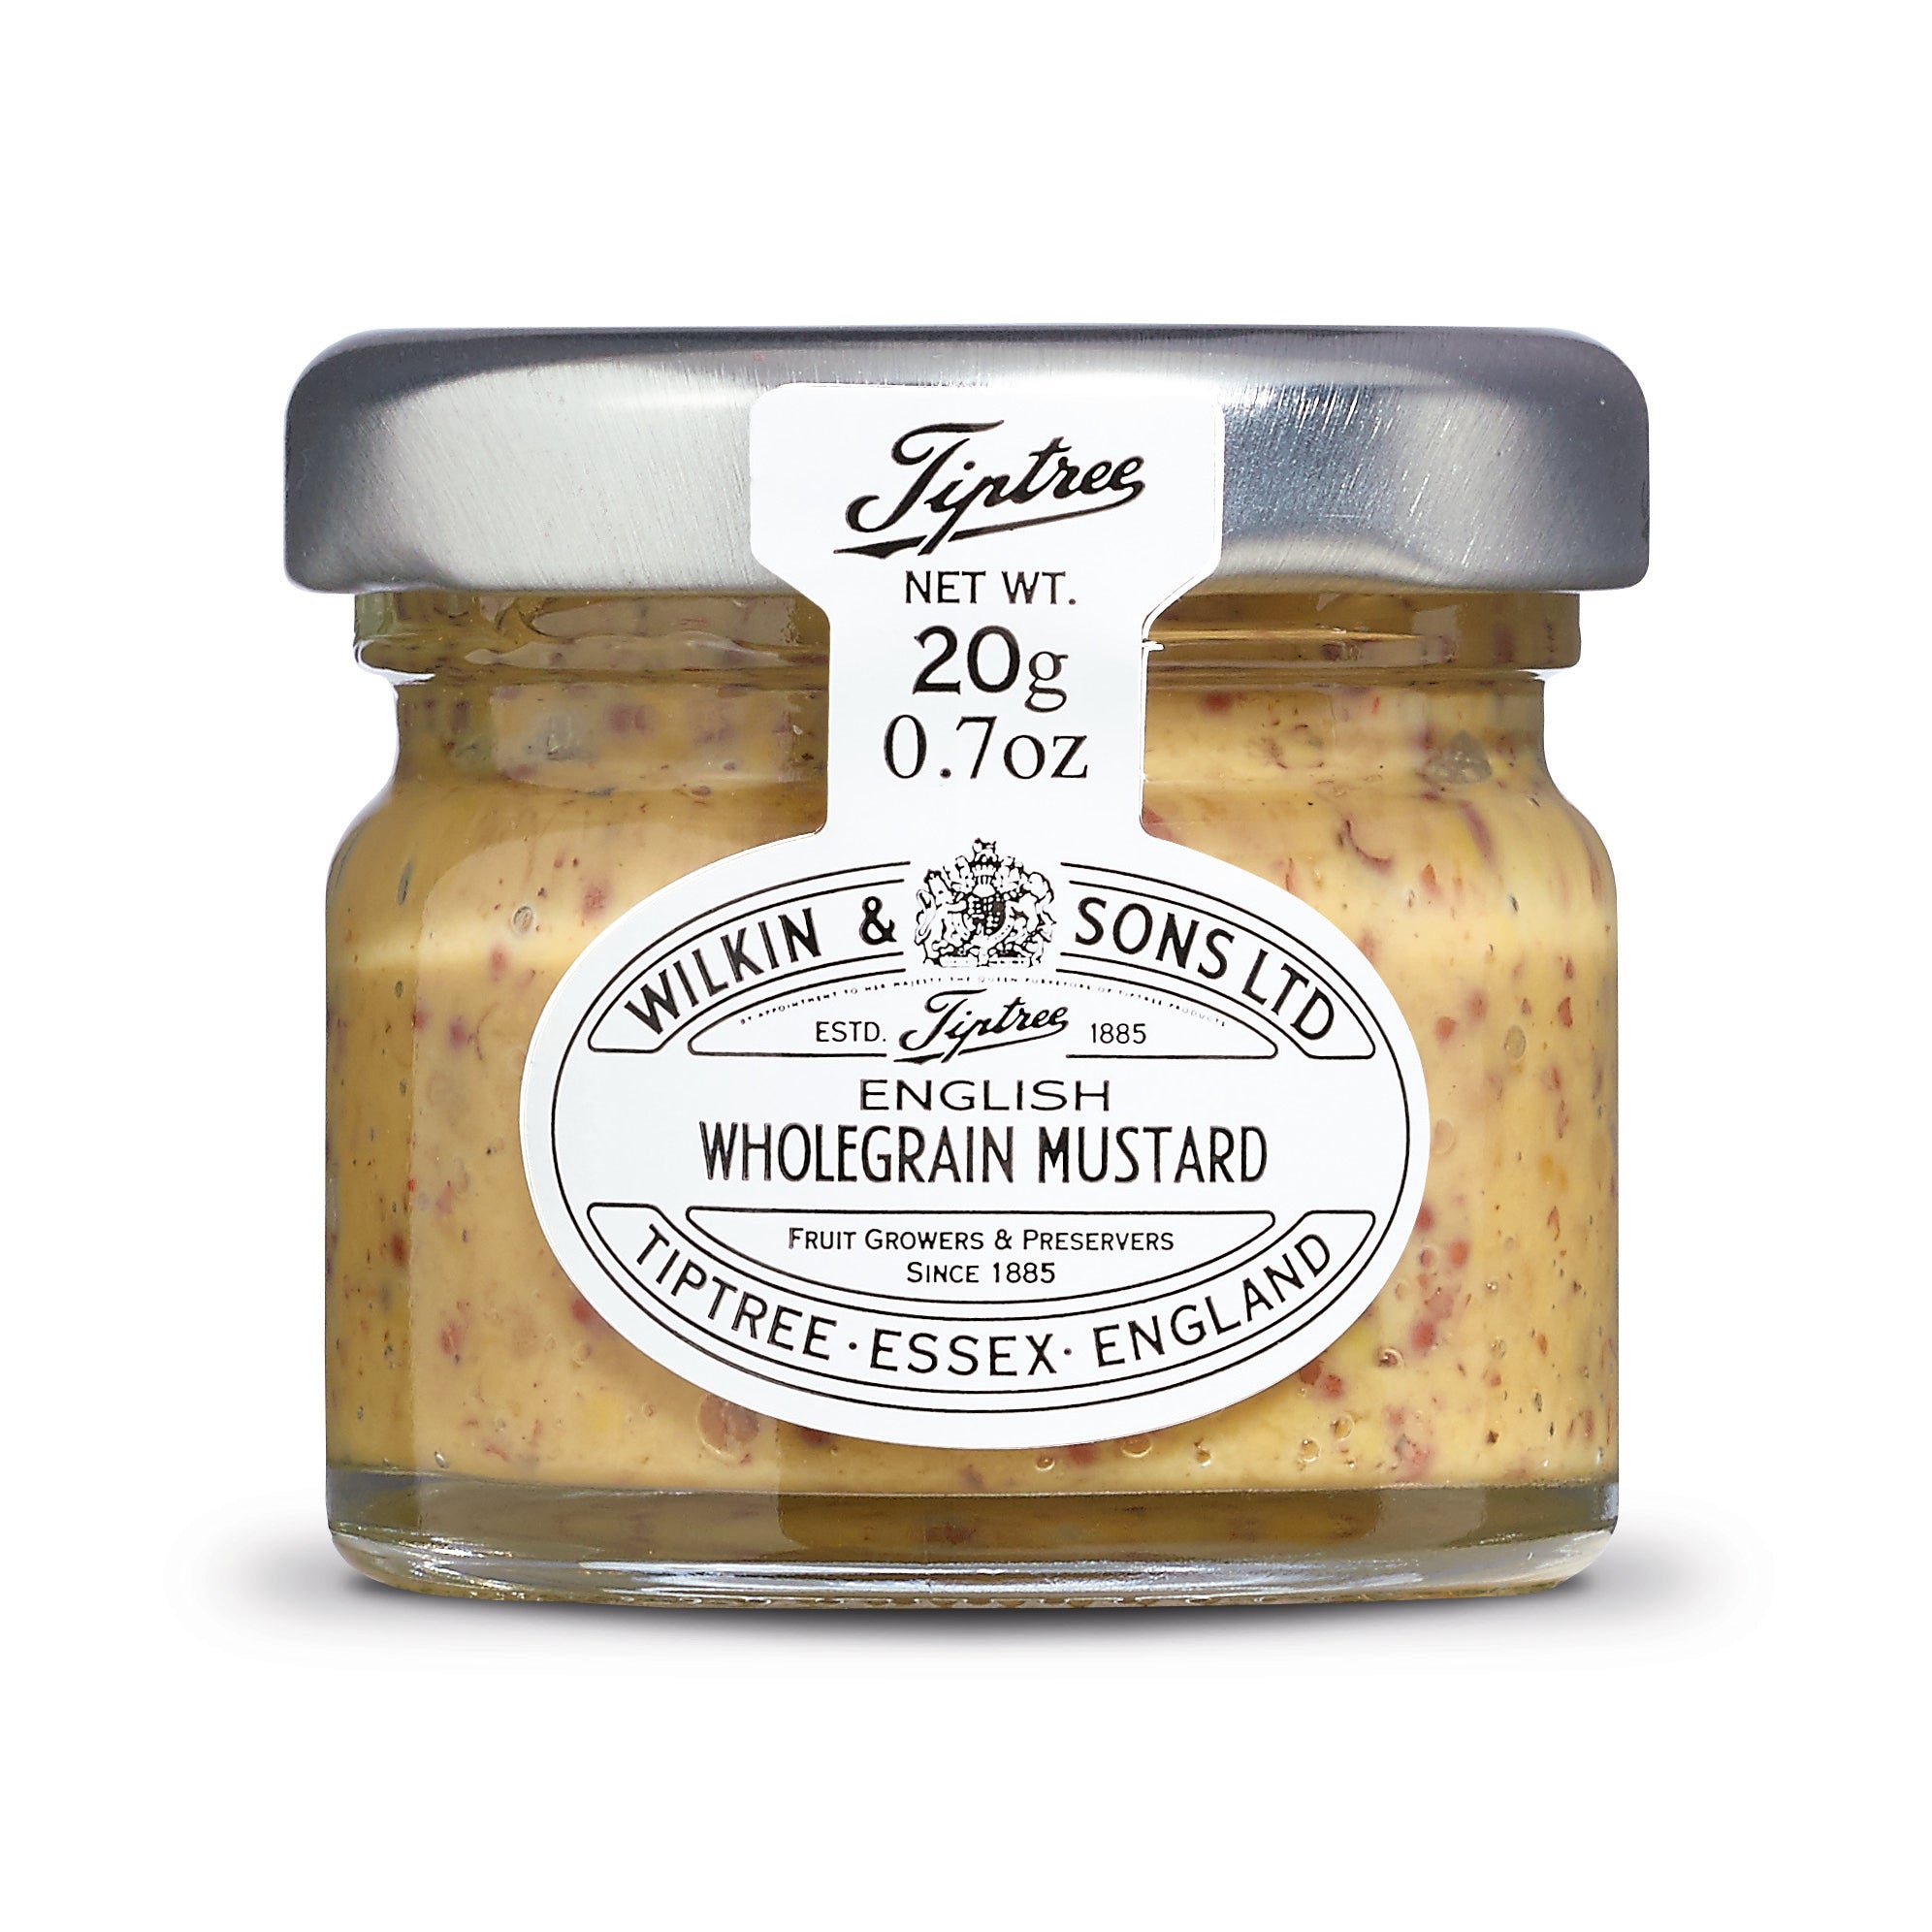 Tiptree Whole-Grain Mustard 1oz